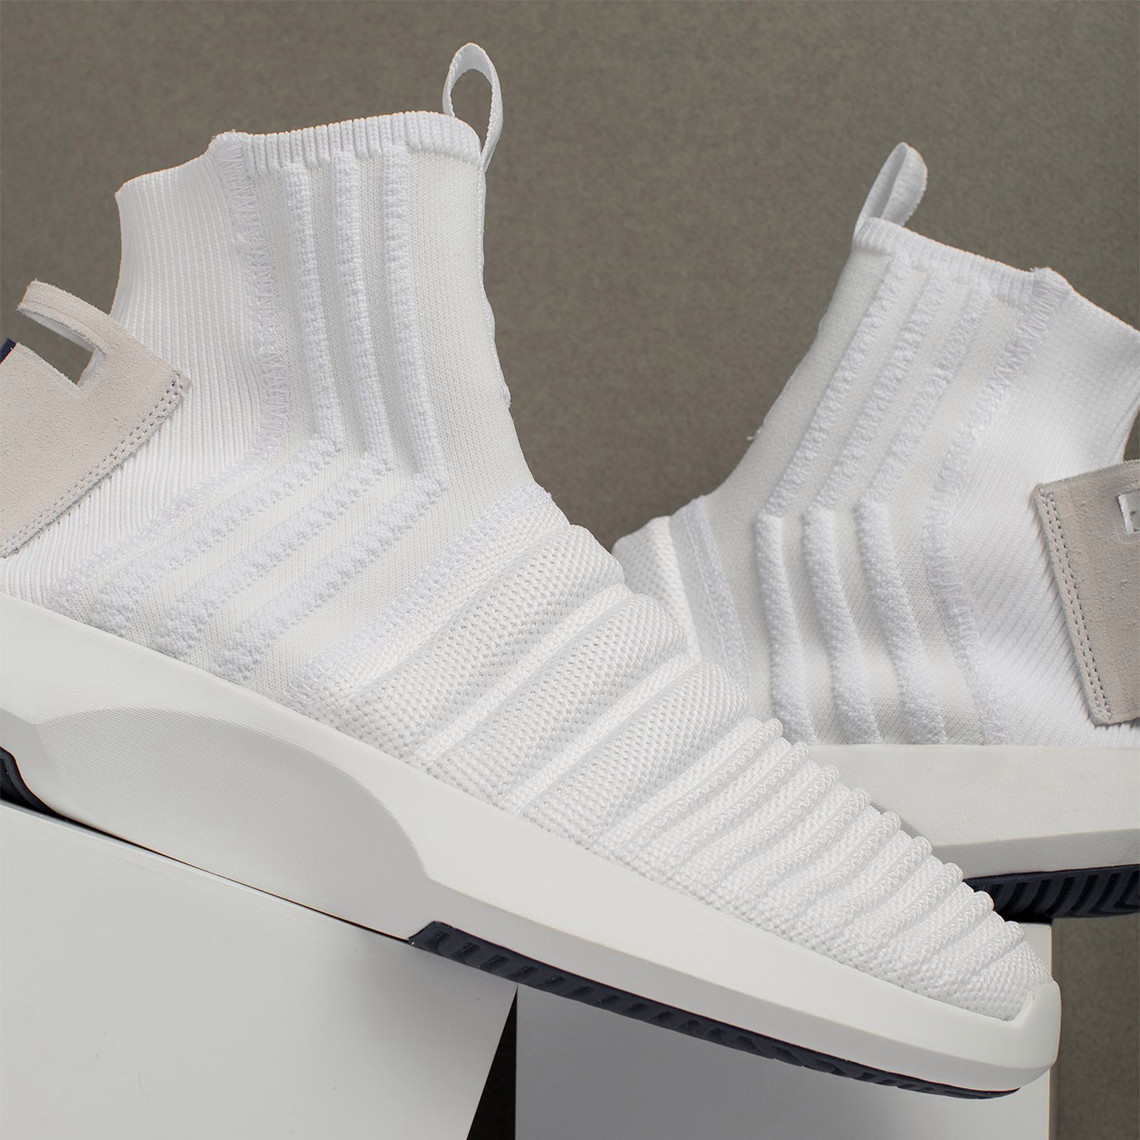 Akrobatik bakke justering adidas Transforms This Kobe Classic Into A Sock-Like Shoe Made Of Primeknit  — Adidas